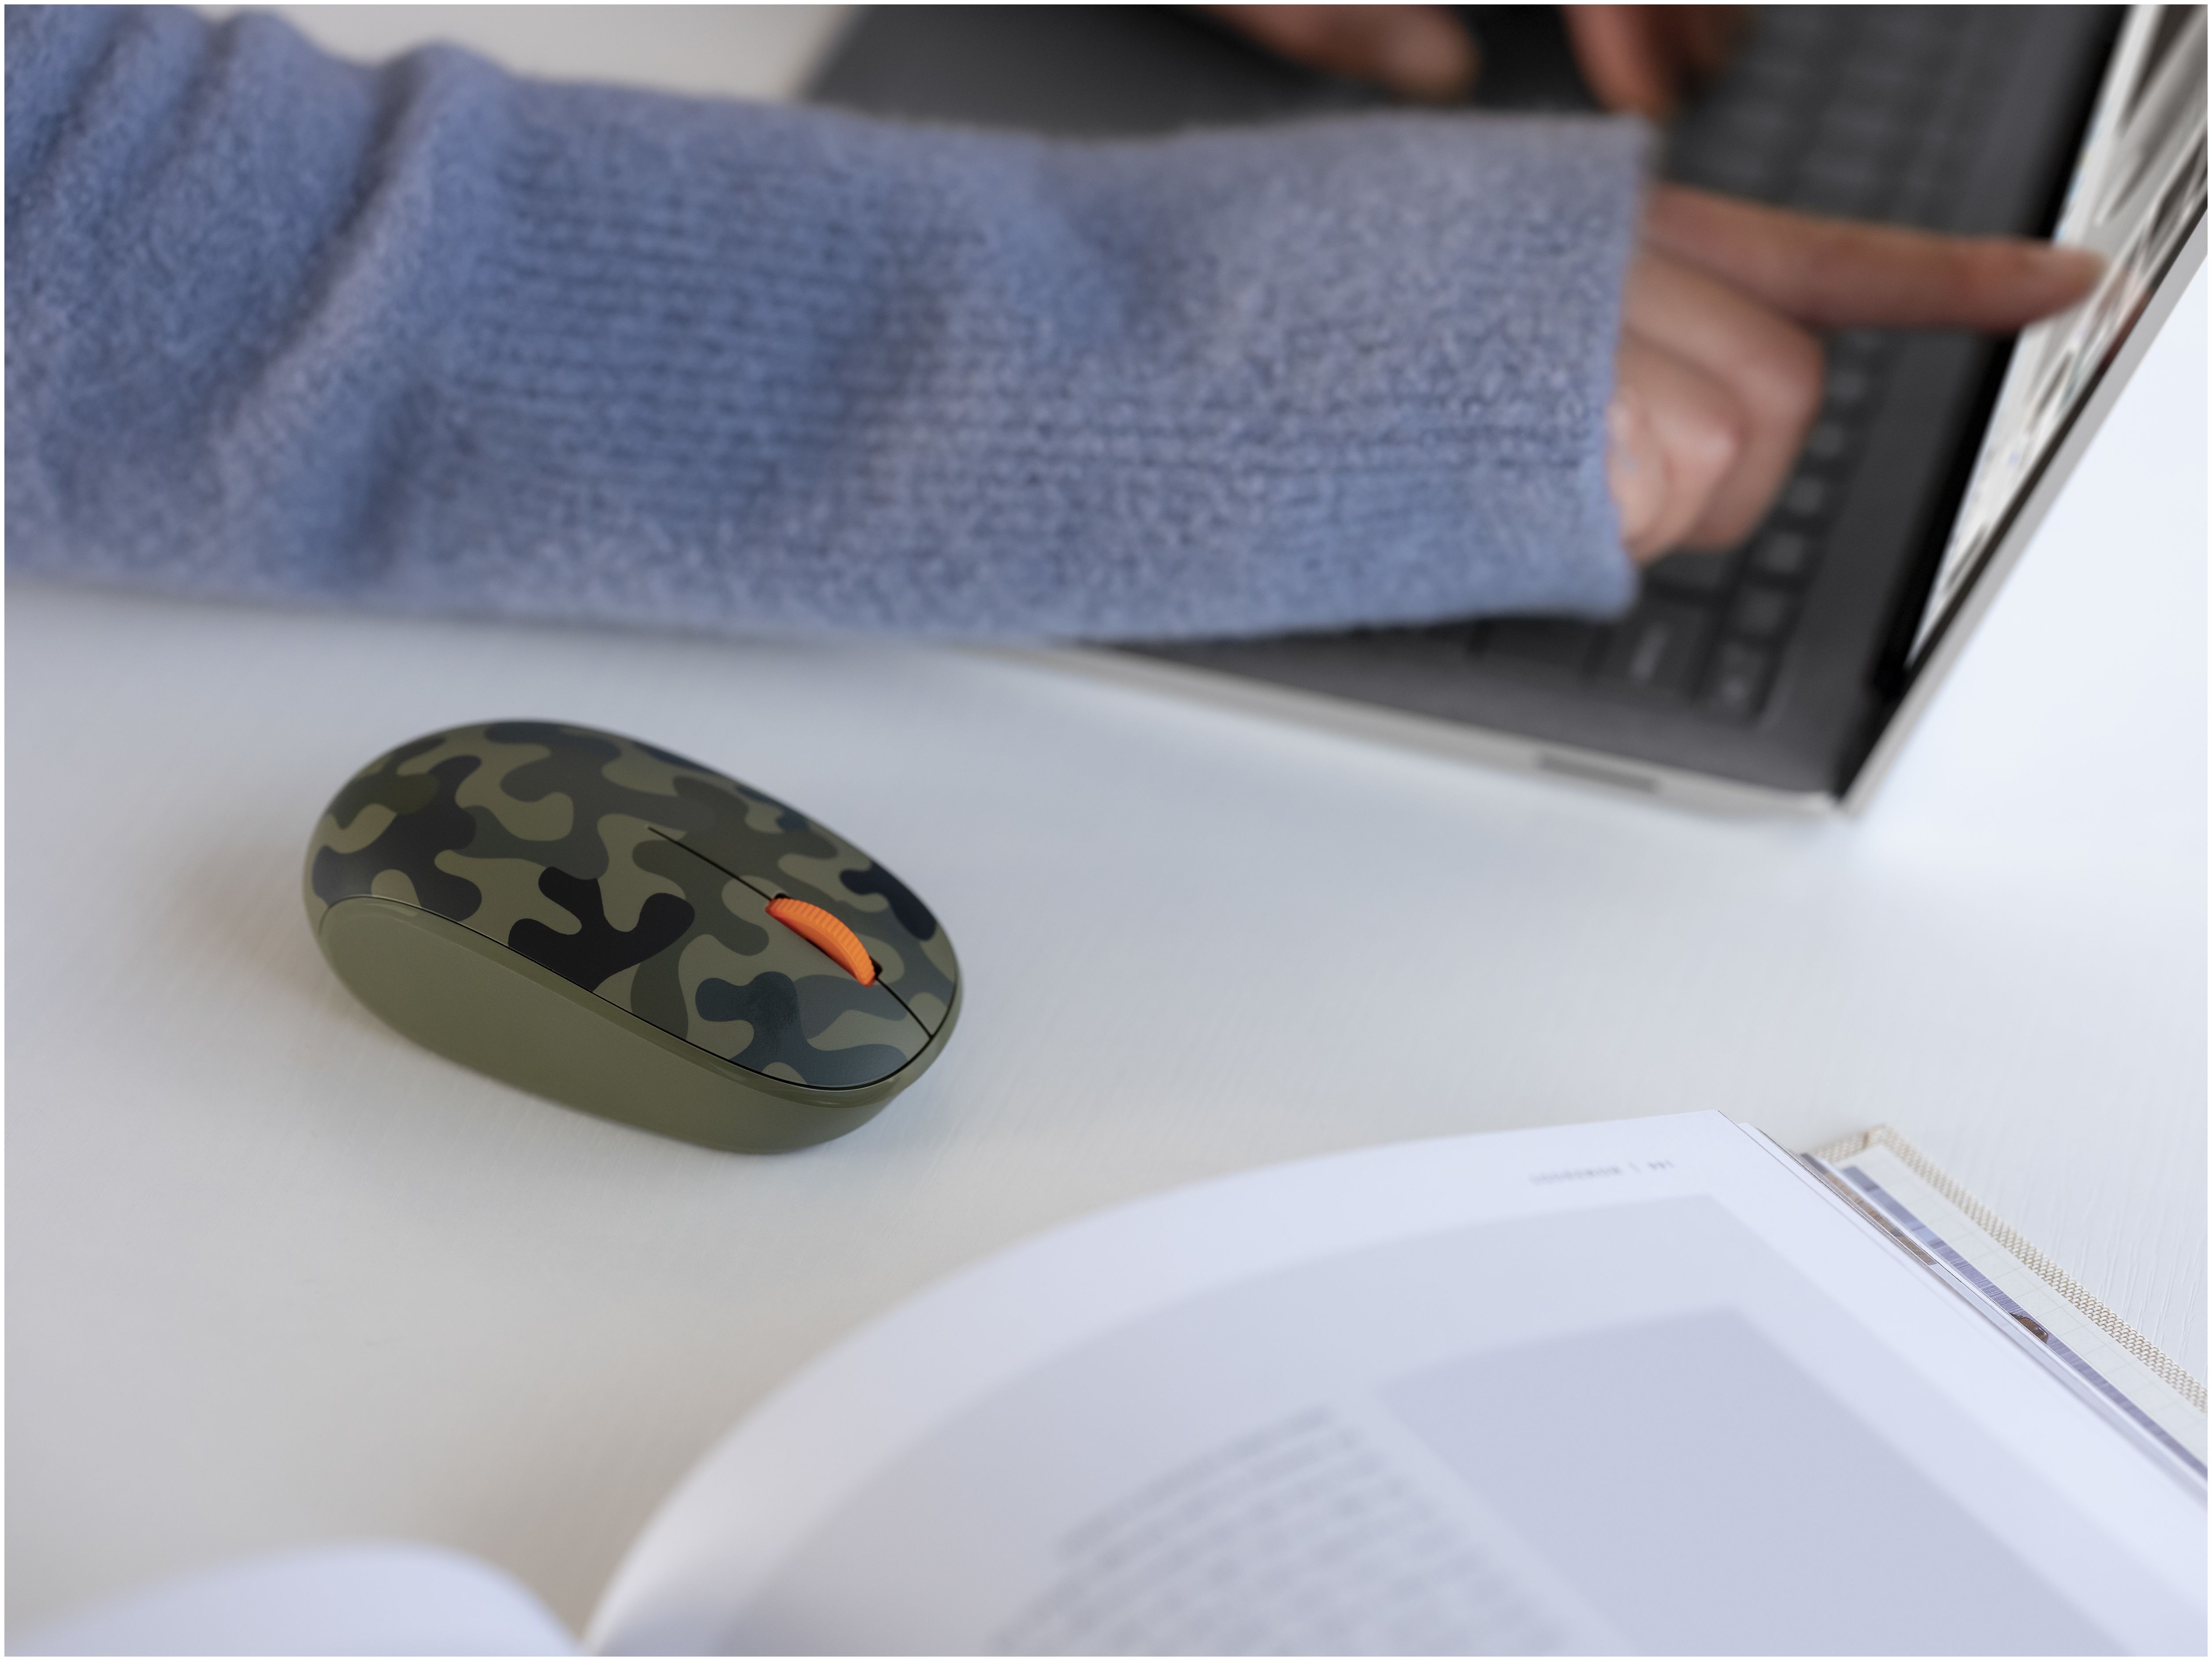 Vollendung Microsoft Bluetooth Technomarkt Mouse (Grün) Maus DPI 1000 Büro von expert